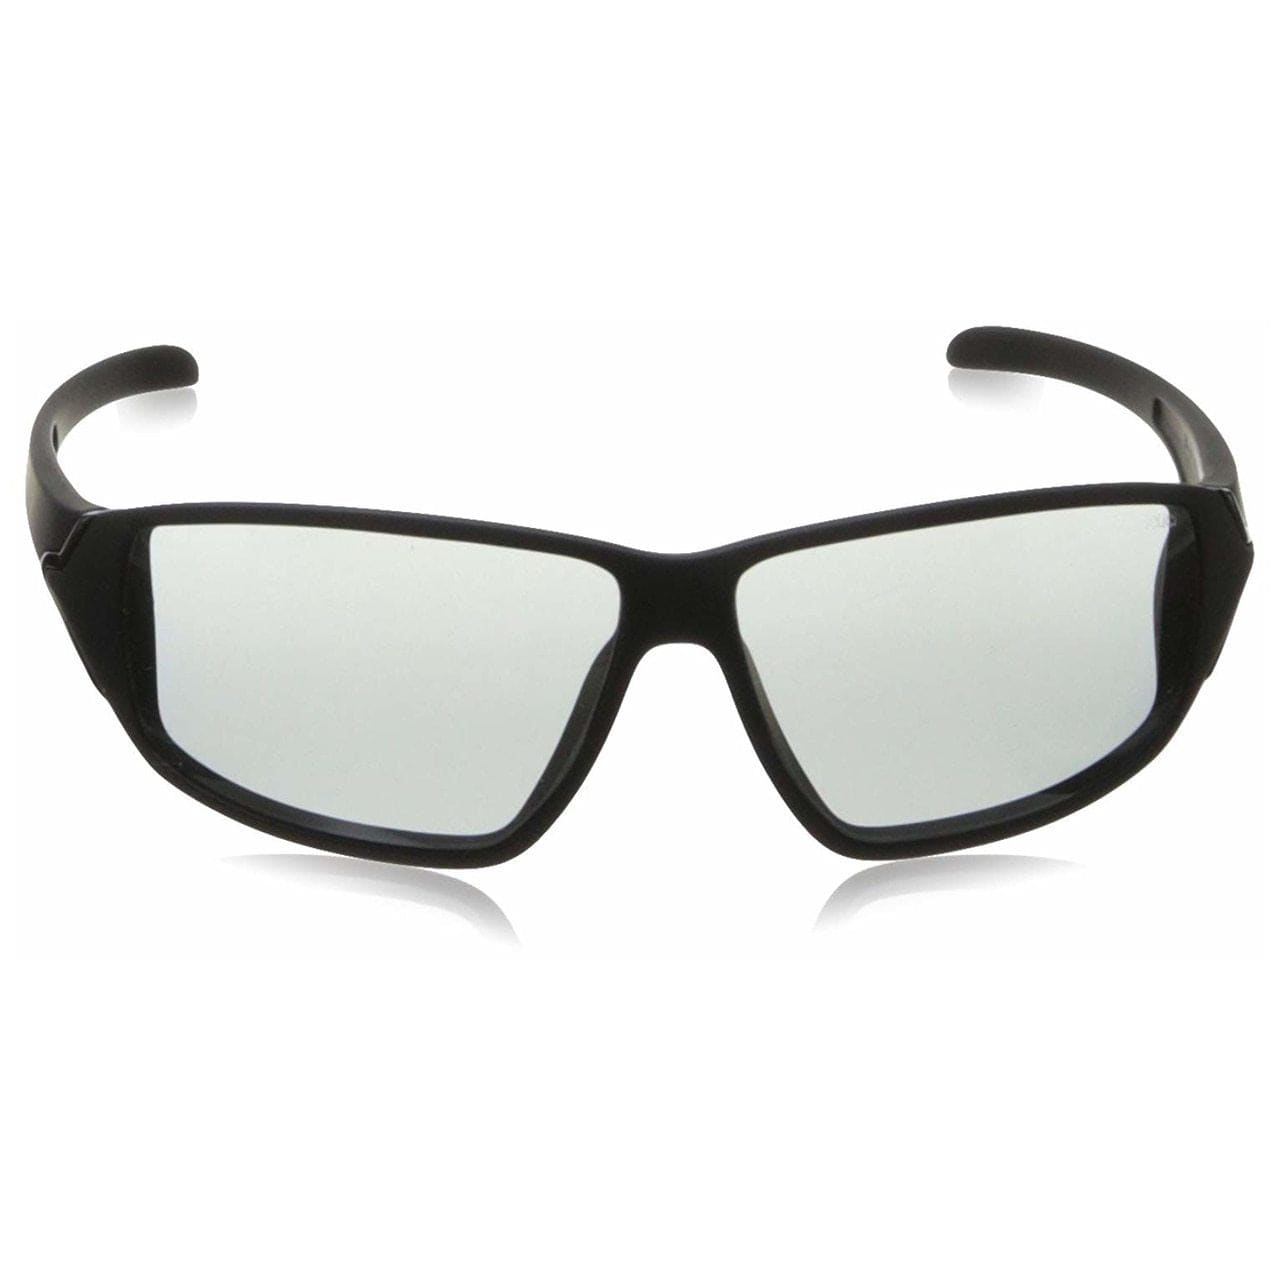 TAG Heuer 9203 181 Racer 2 Grey Wrap Around Sunglasses with Grey Photochromic Lens 669203181631203 751105375653